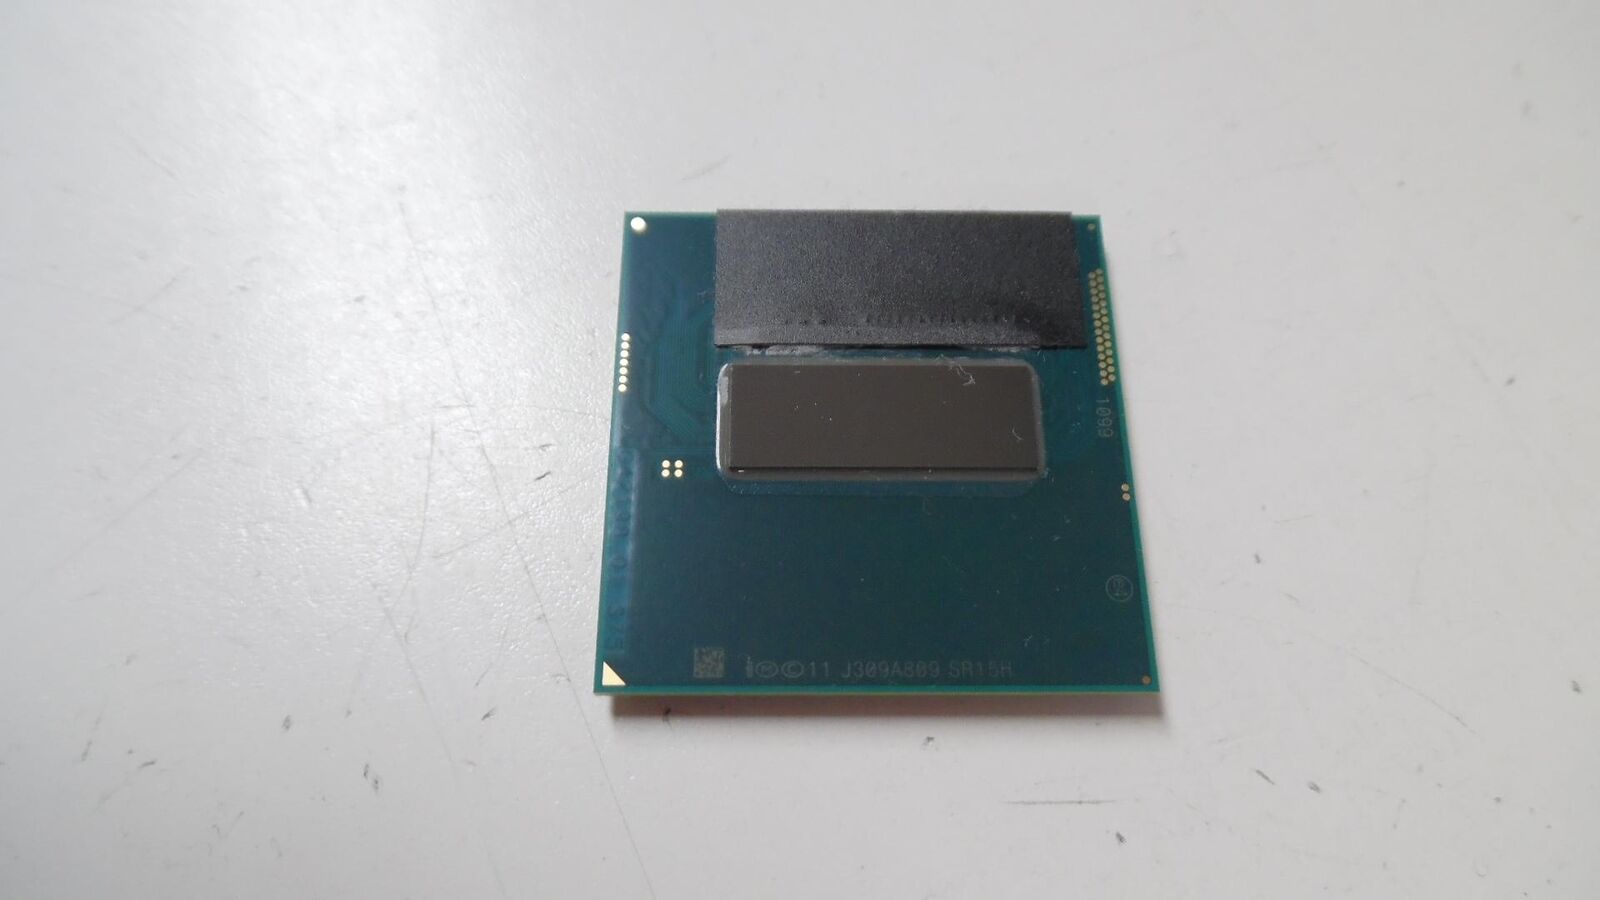 Quad-Core Intel i7-4700MQ 2.4GHz - CPU For Socket G3 - SR15H 